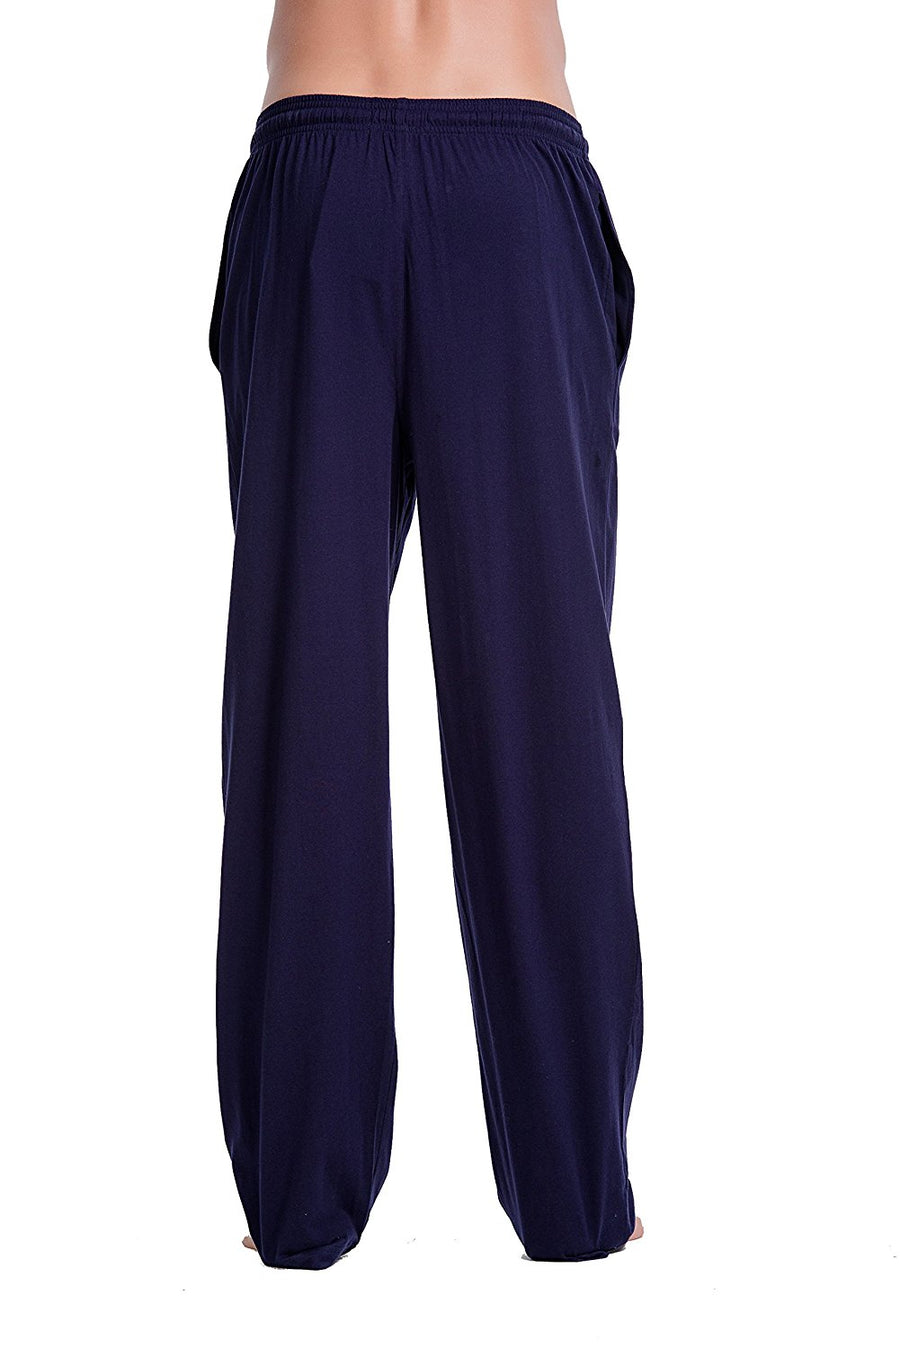 CYZ Men's 100% Cotton Jersey Knit Pajama Pants/Lounge Pants With Drawstring